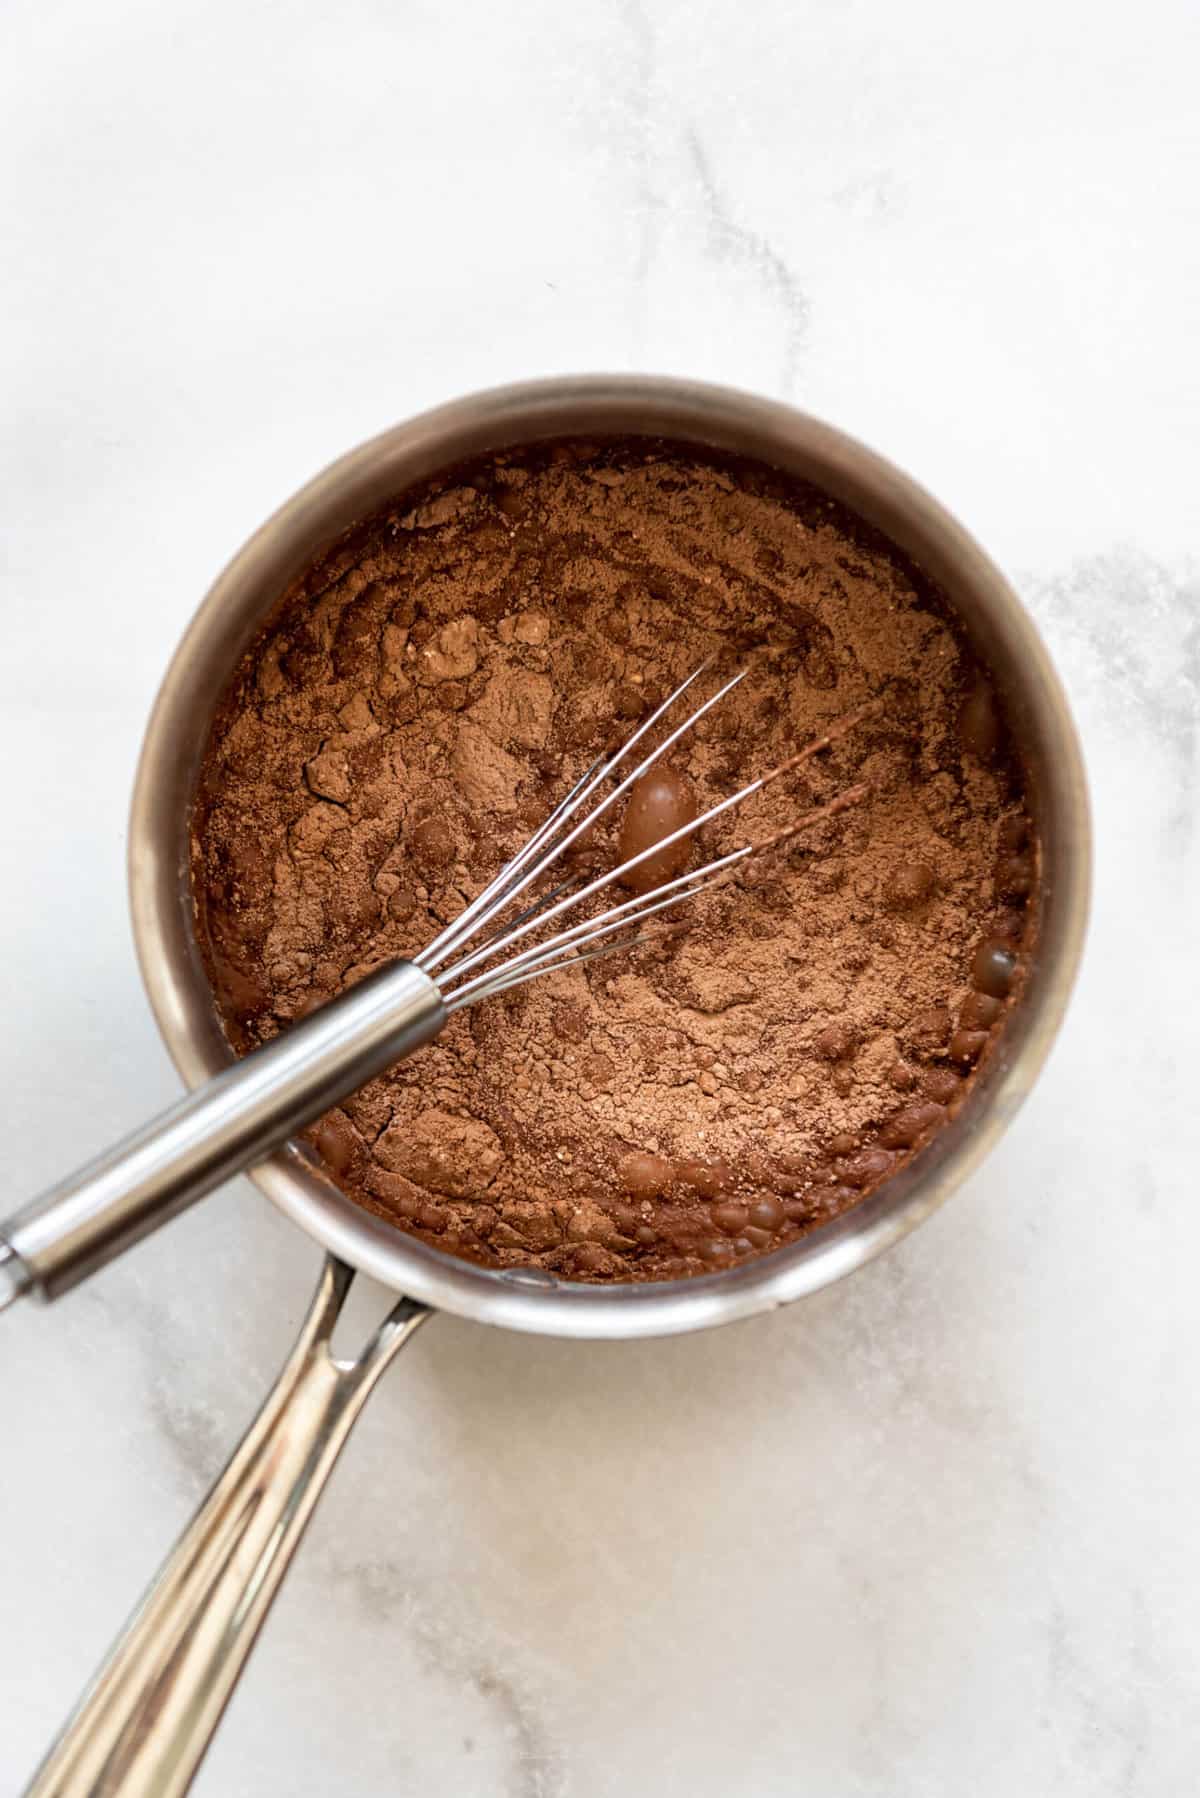 Whisking cocoa powder and cornstarch into milk and sugar to make chocolate pudding.